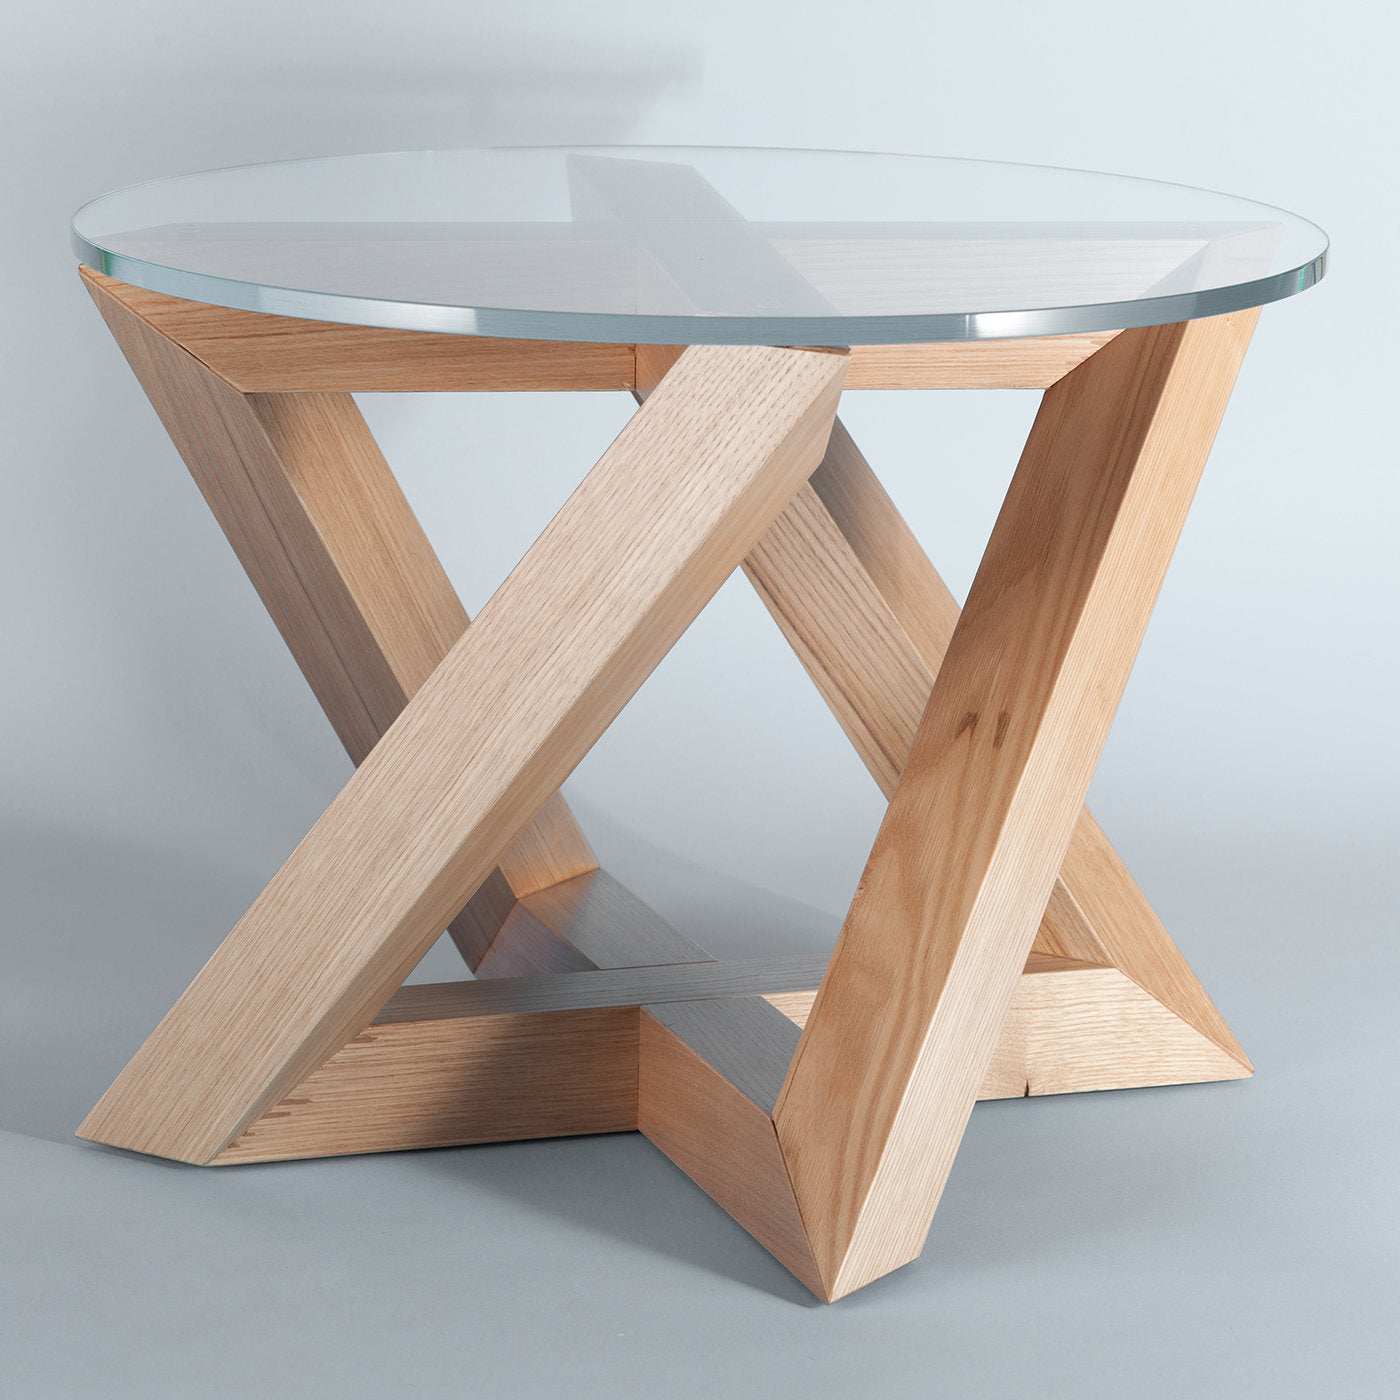 RK Side Table #1 by Antonio Saporito - Alternative view 1